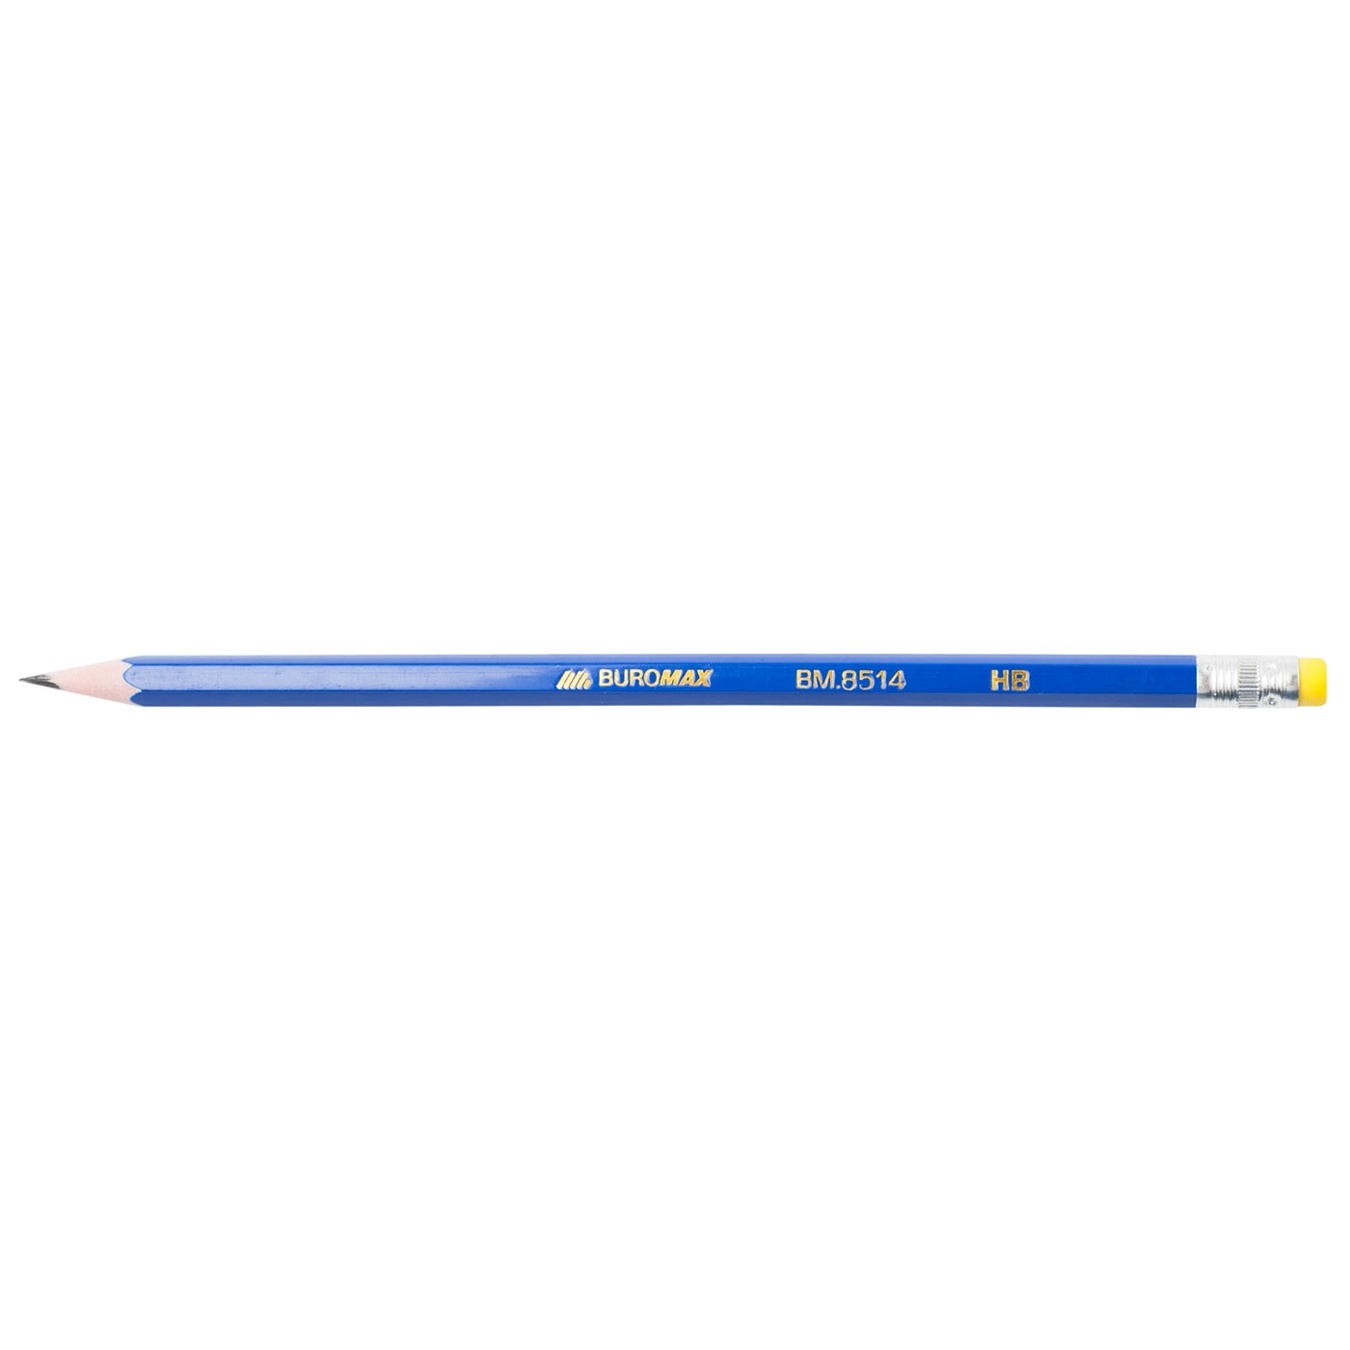 Buromax NV graphite pencil with eraser